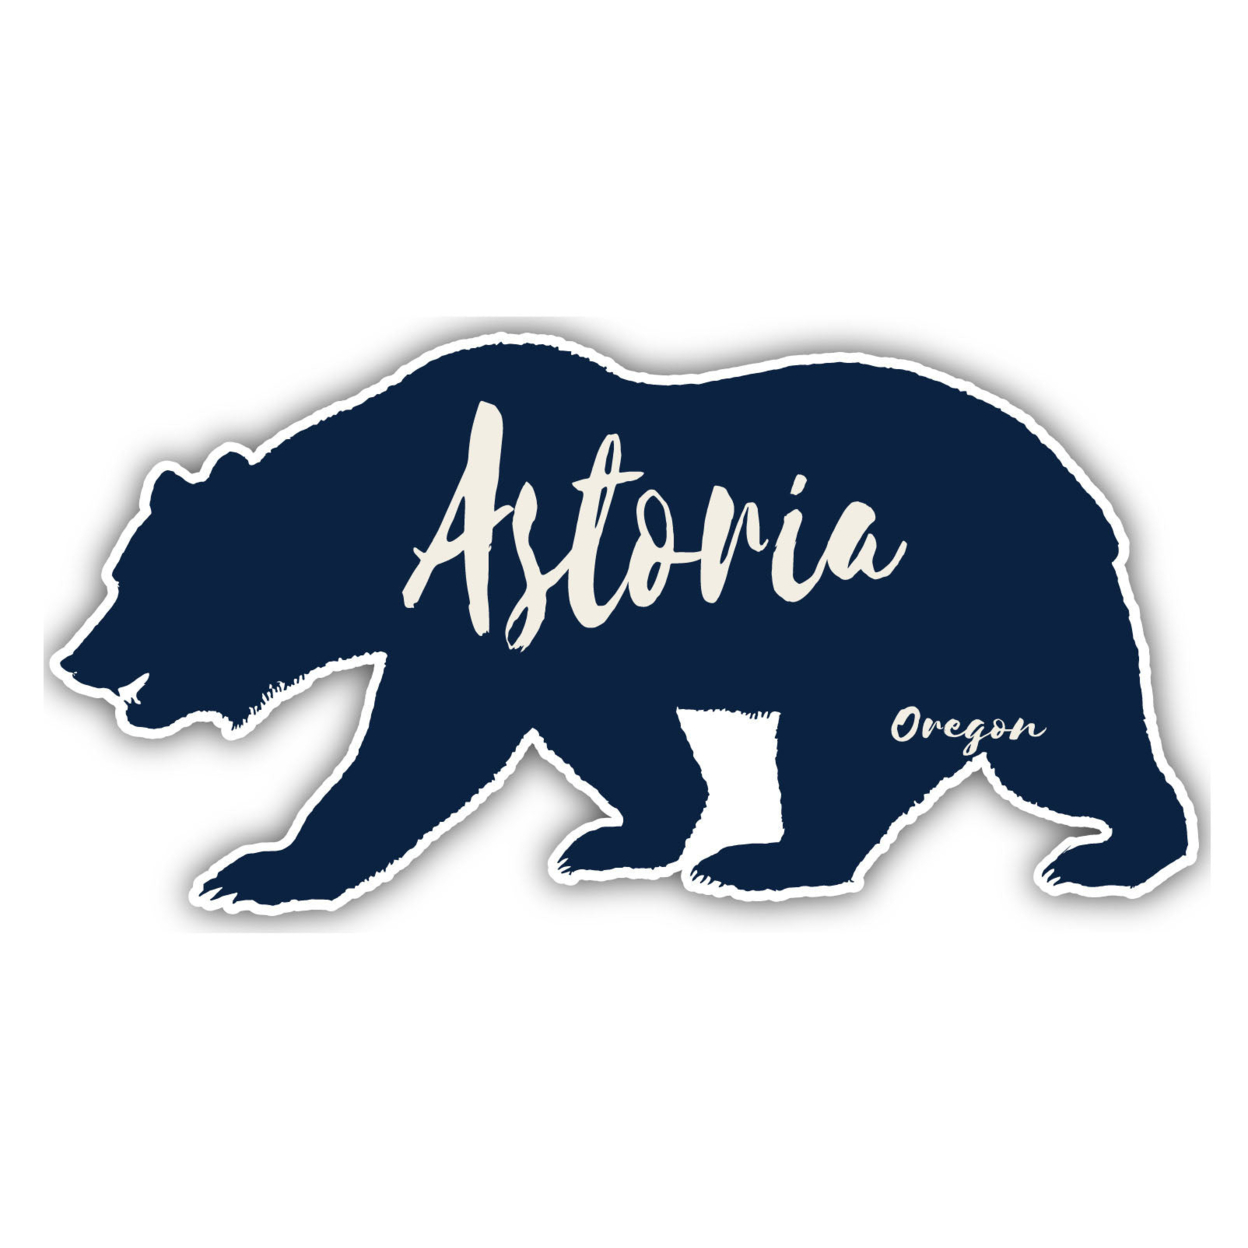 Astoria Oregon Souvenir Decorative Stickers (Choose Theme And Size) - 4-Pack, 10-Inch, Camp Life